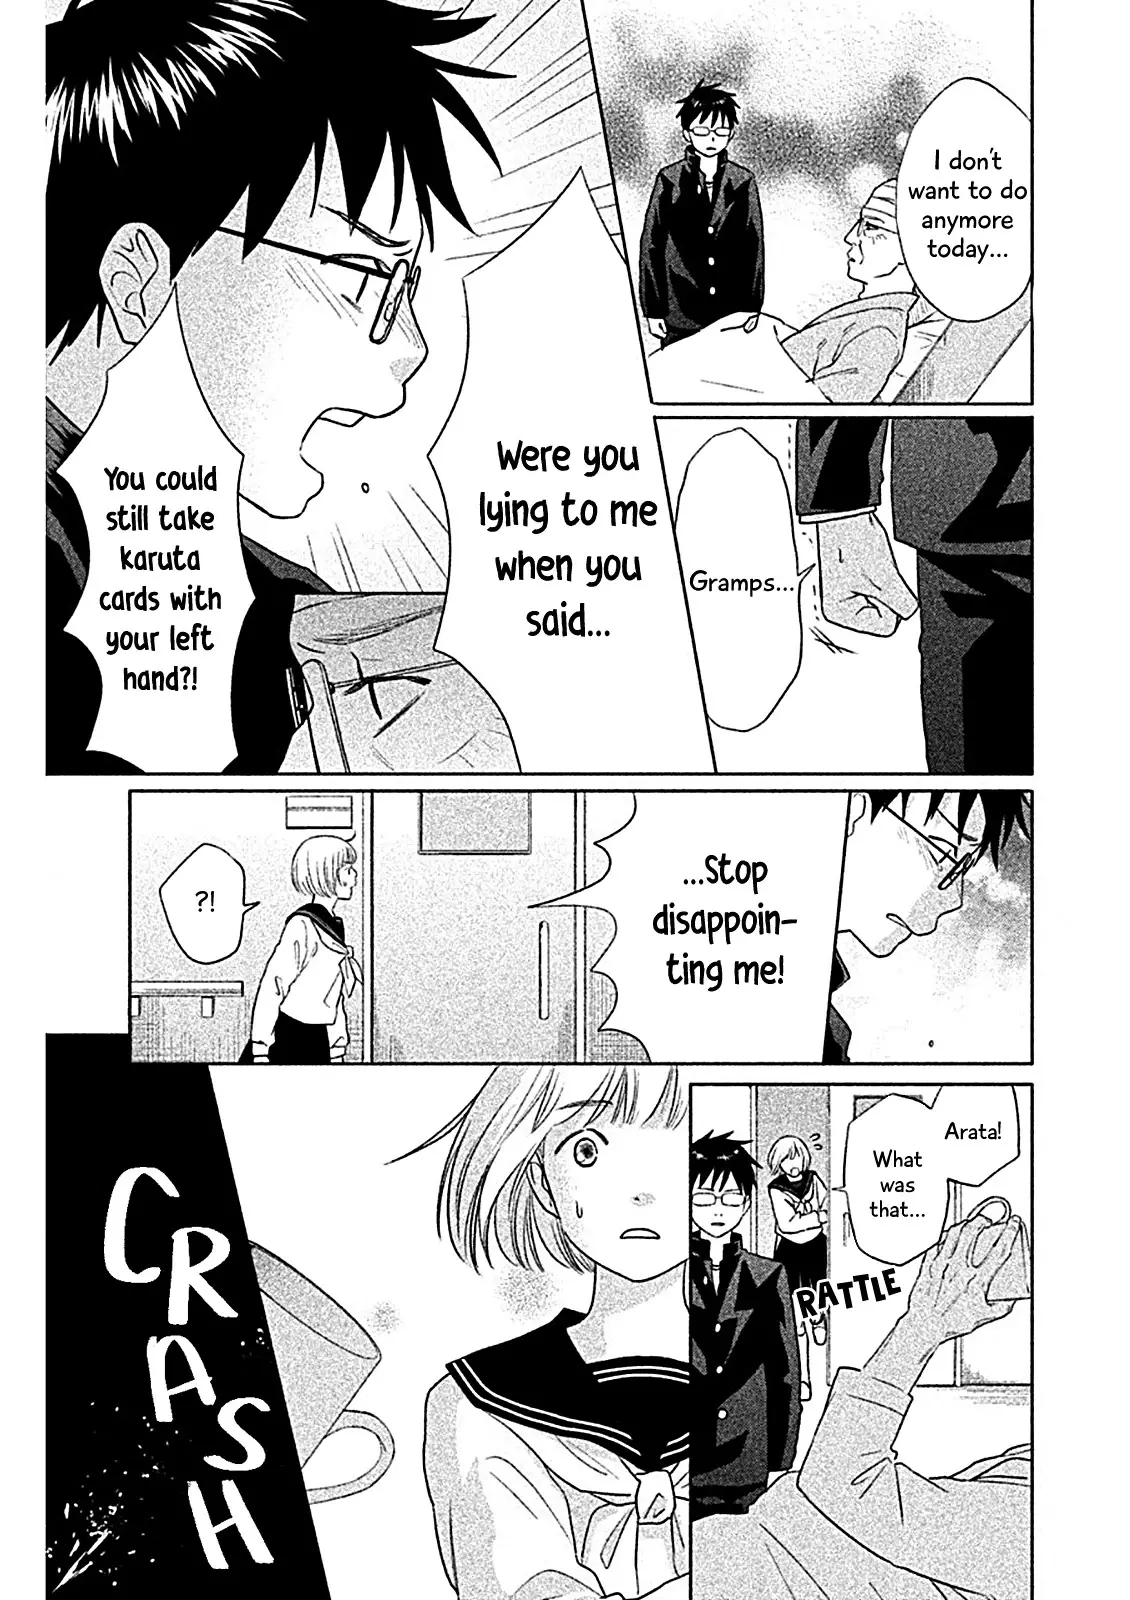 Chihayafuru: Middle School Arc - 8 page 5